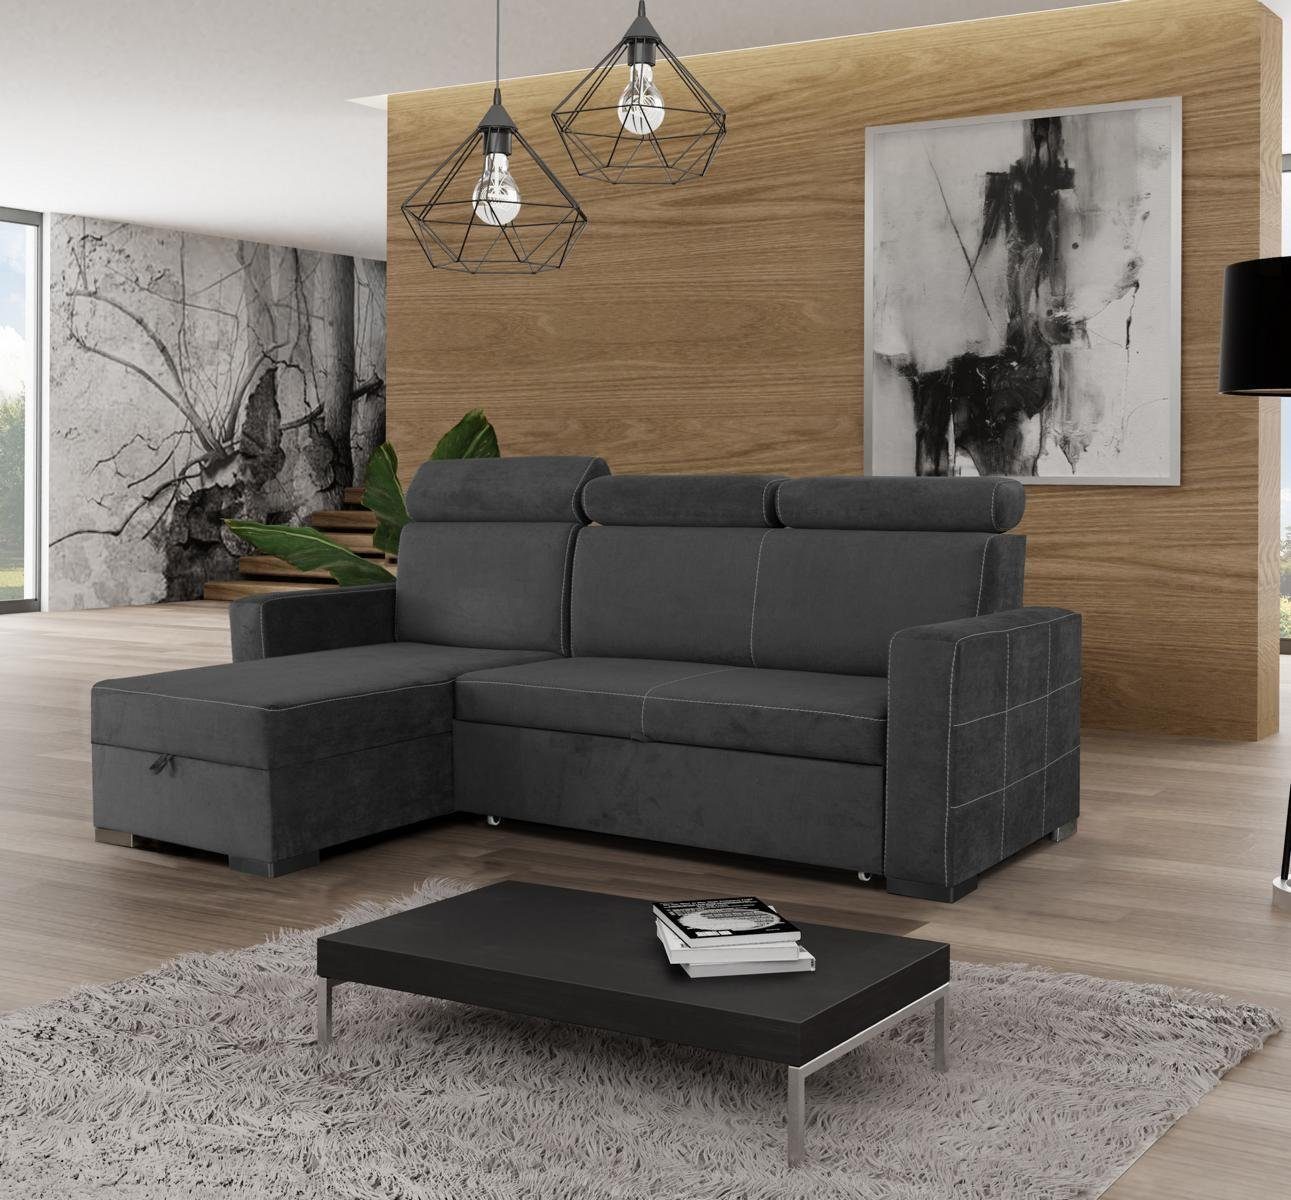 JVmoebel Ecksofa Luxus Blaues Ecksofa Couch in Design Neu, Moderne Schwarz Made stilvolles L-Form Europe